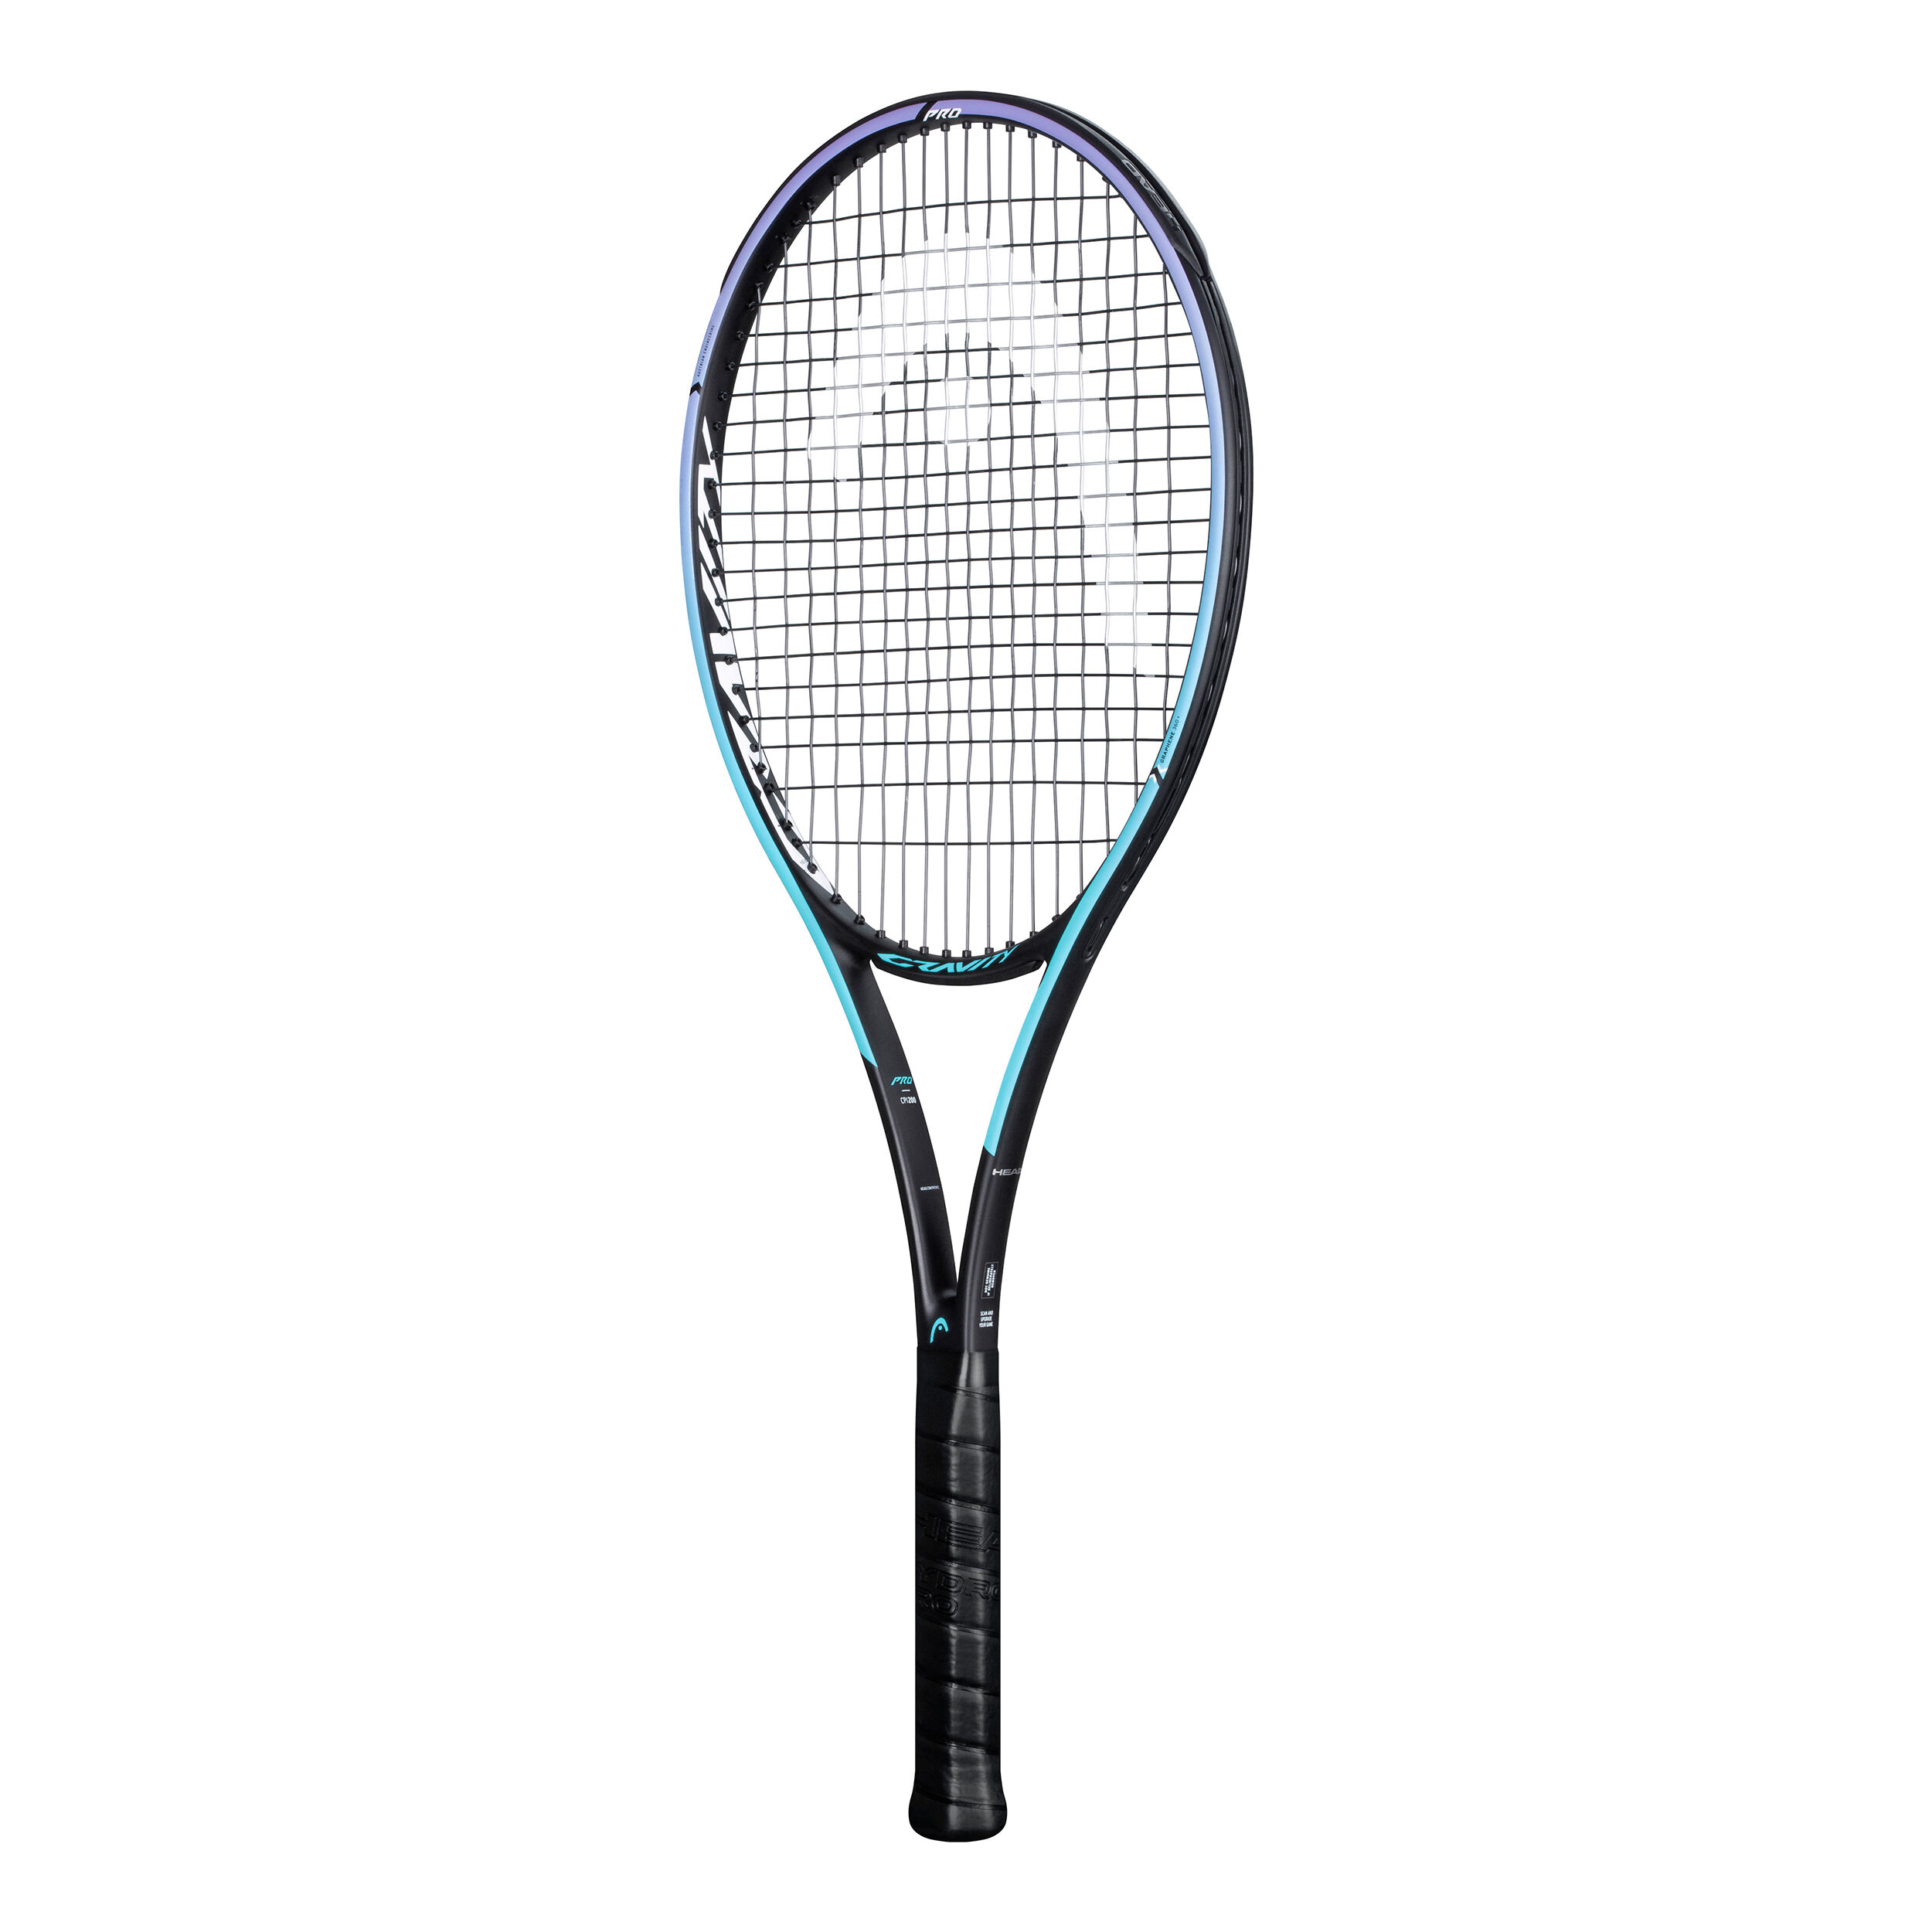 Gravity pro raqueta de tenis unbesaitet PVP 270,00 € nuevo Head graphene 360 